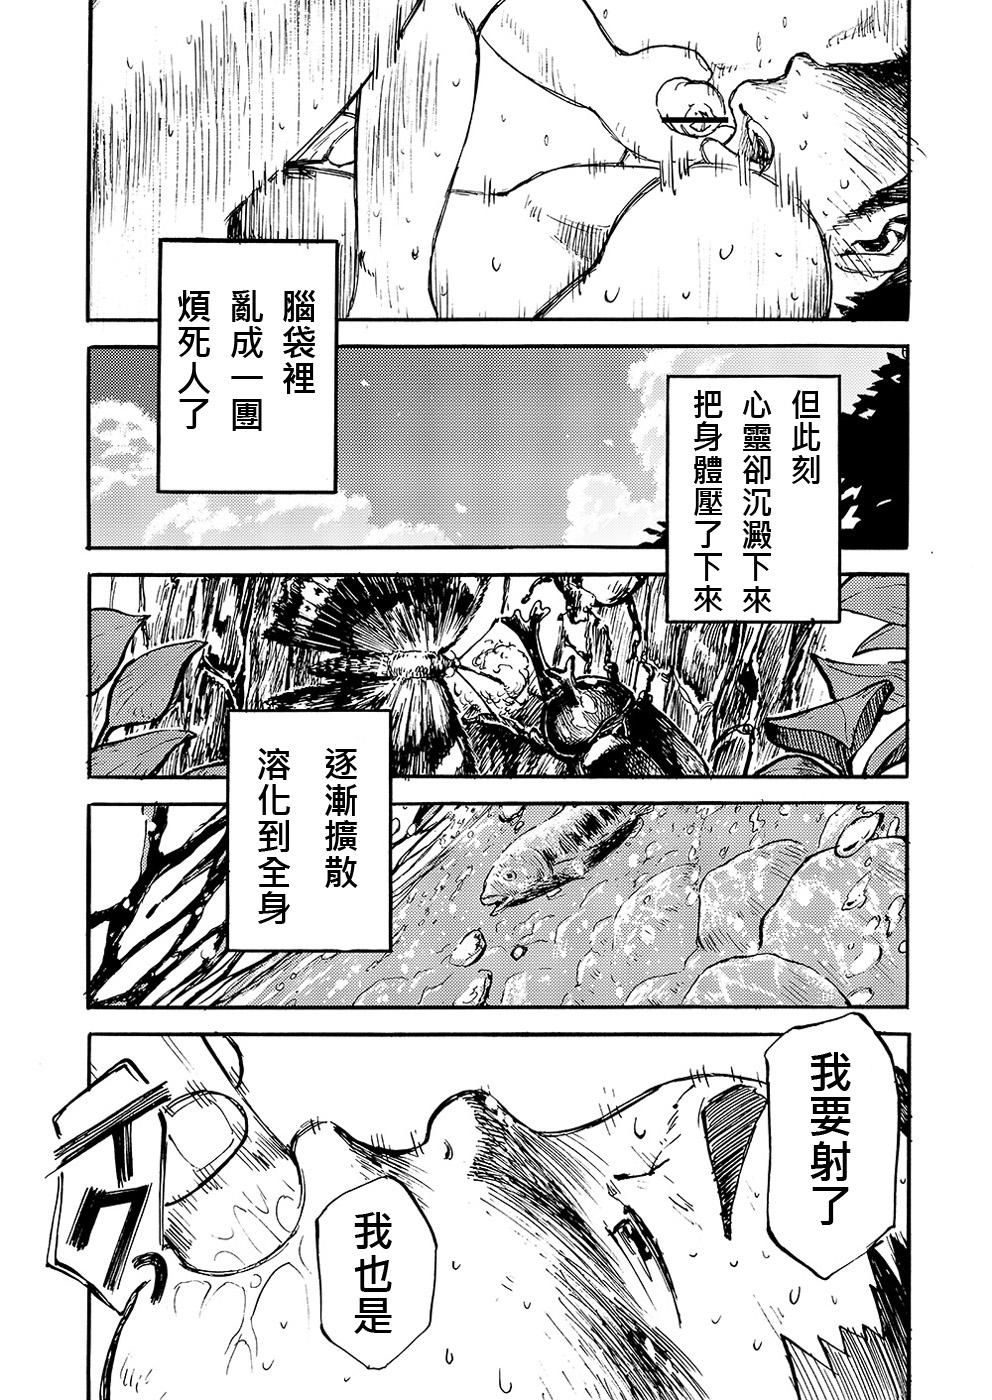 Manga Shounen Zoom Vol. 02 | 漫畫少年特寫 Vol. 02 47